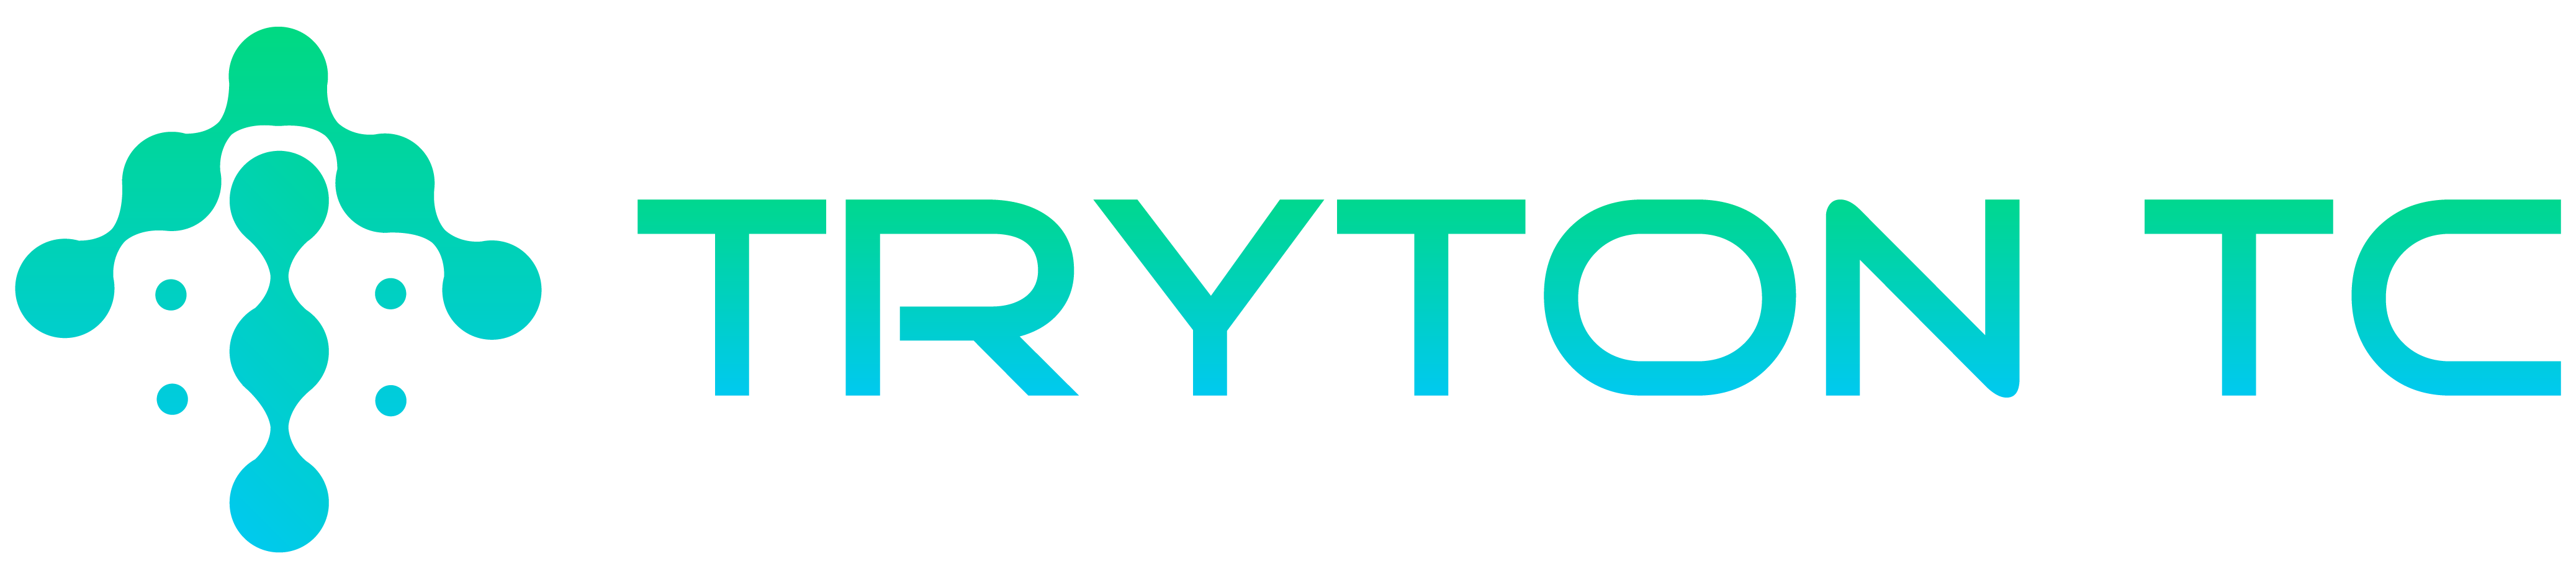 tryton logo cropped